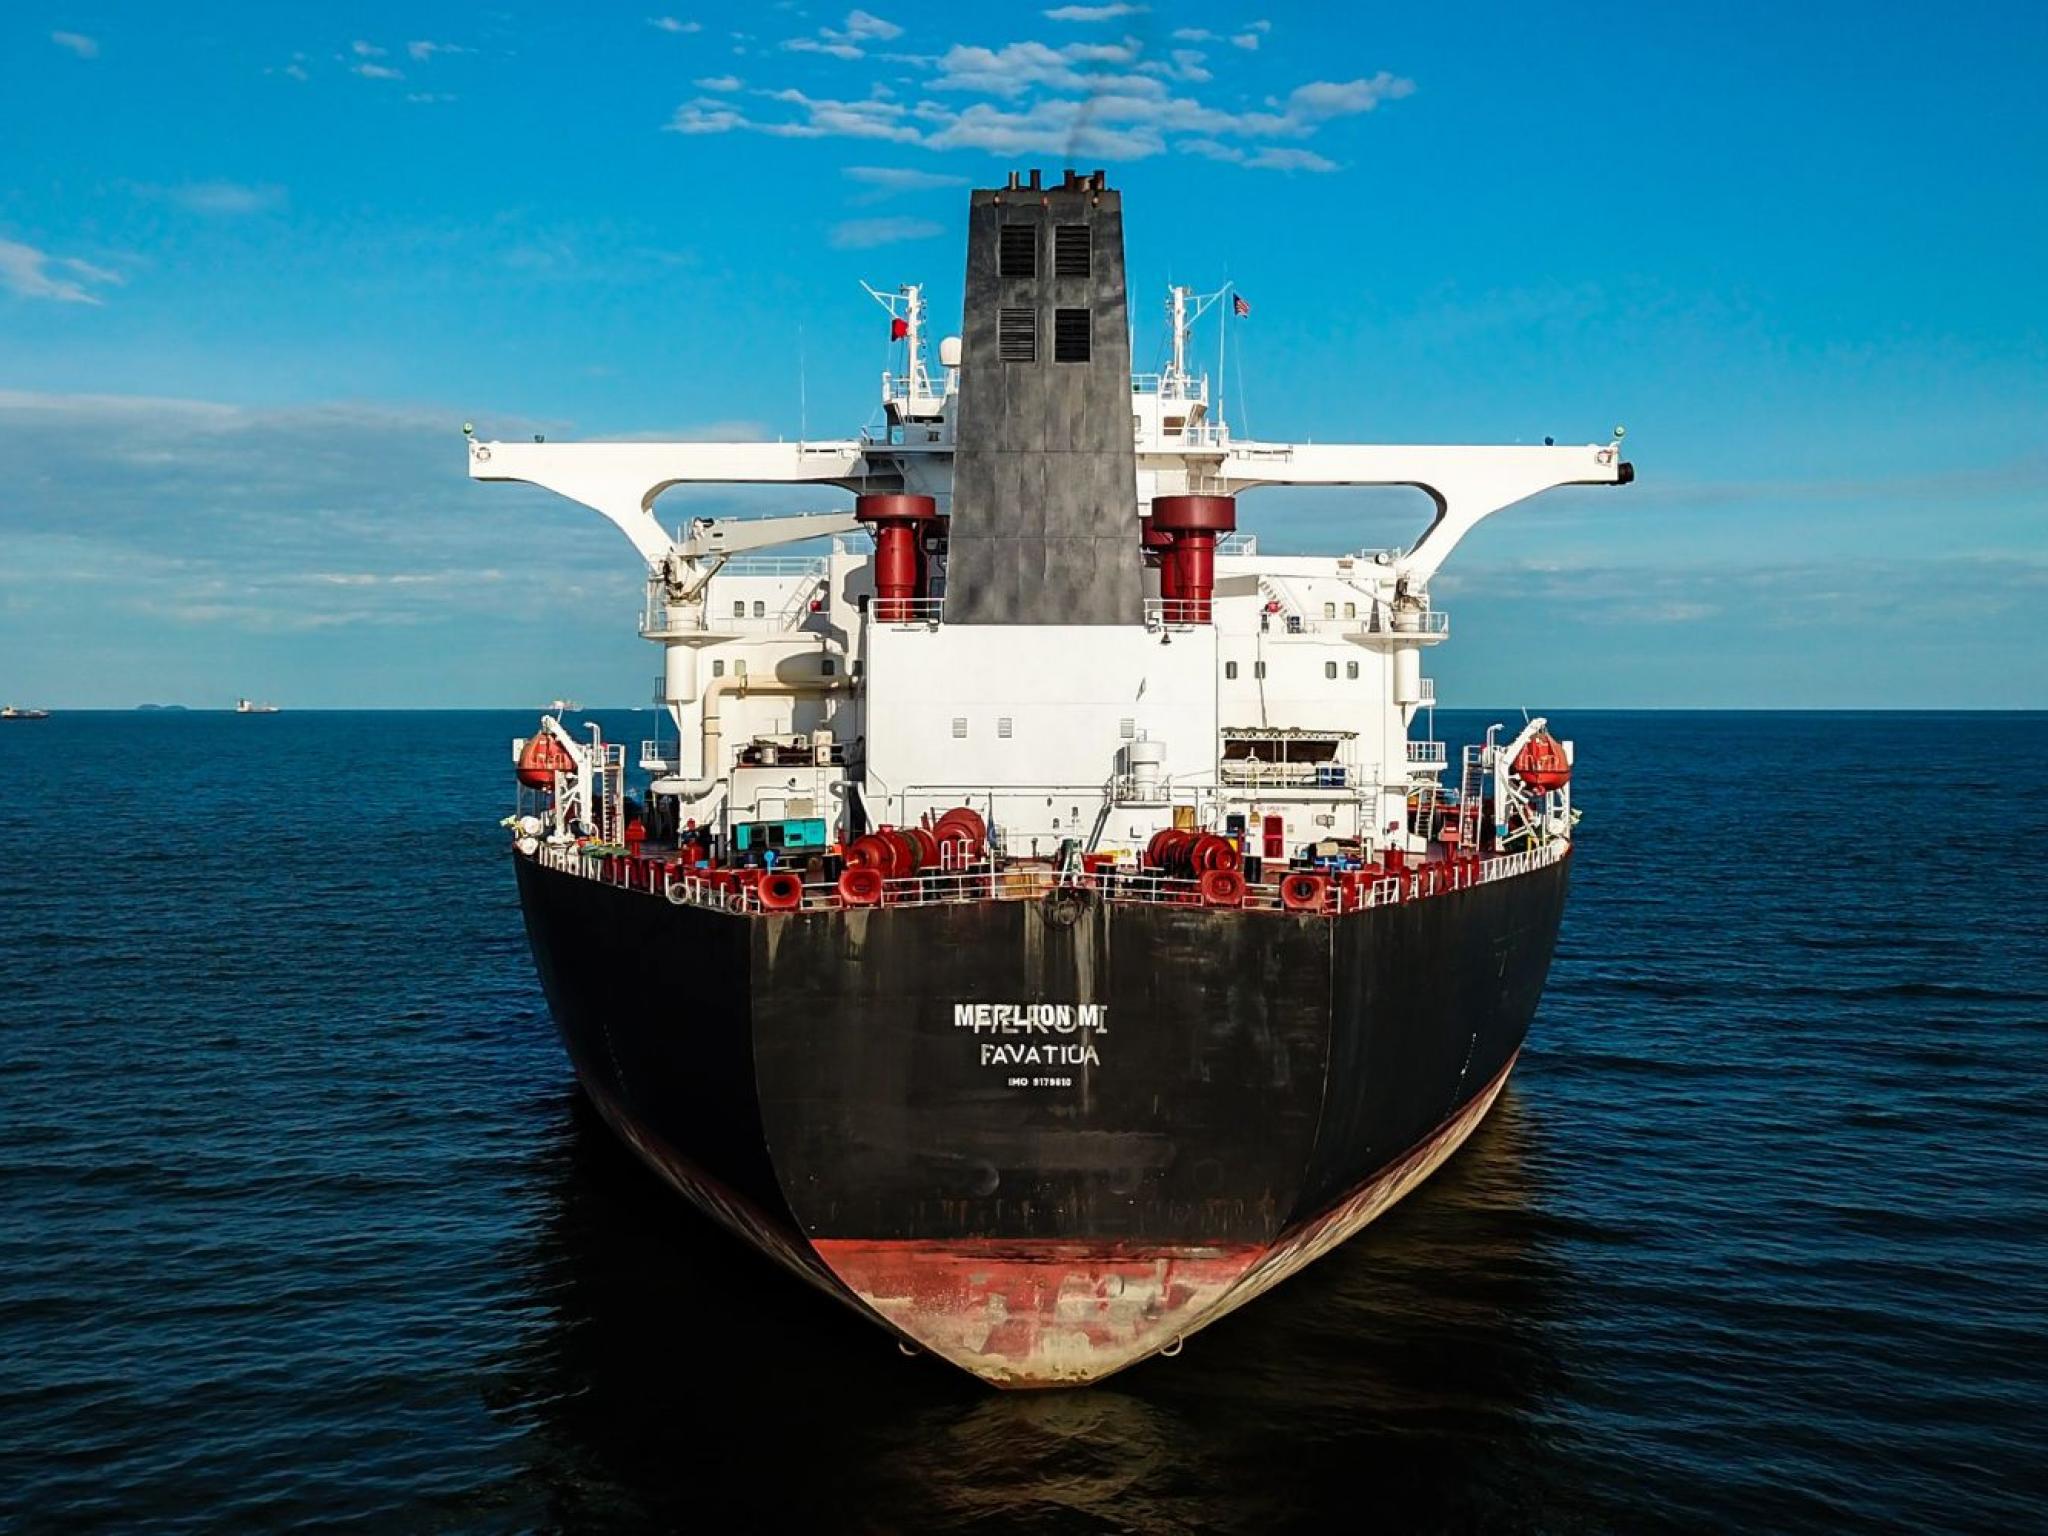  international-seaways-q3-revenue-surge-highlights-tanker-industrys-resilience 